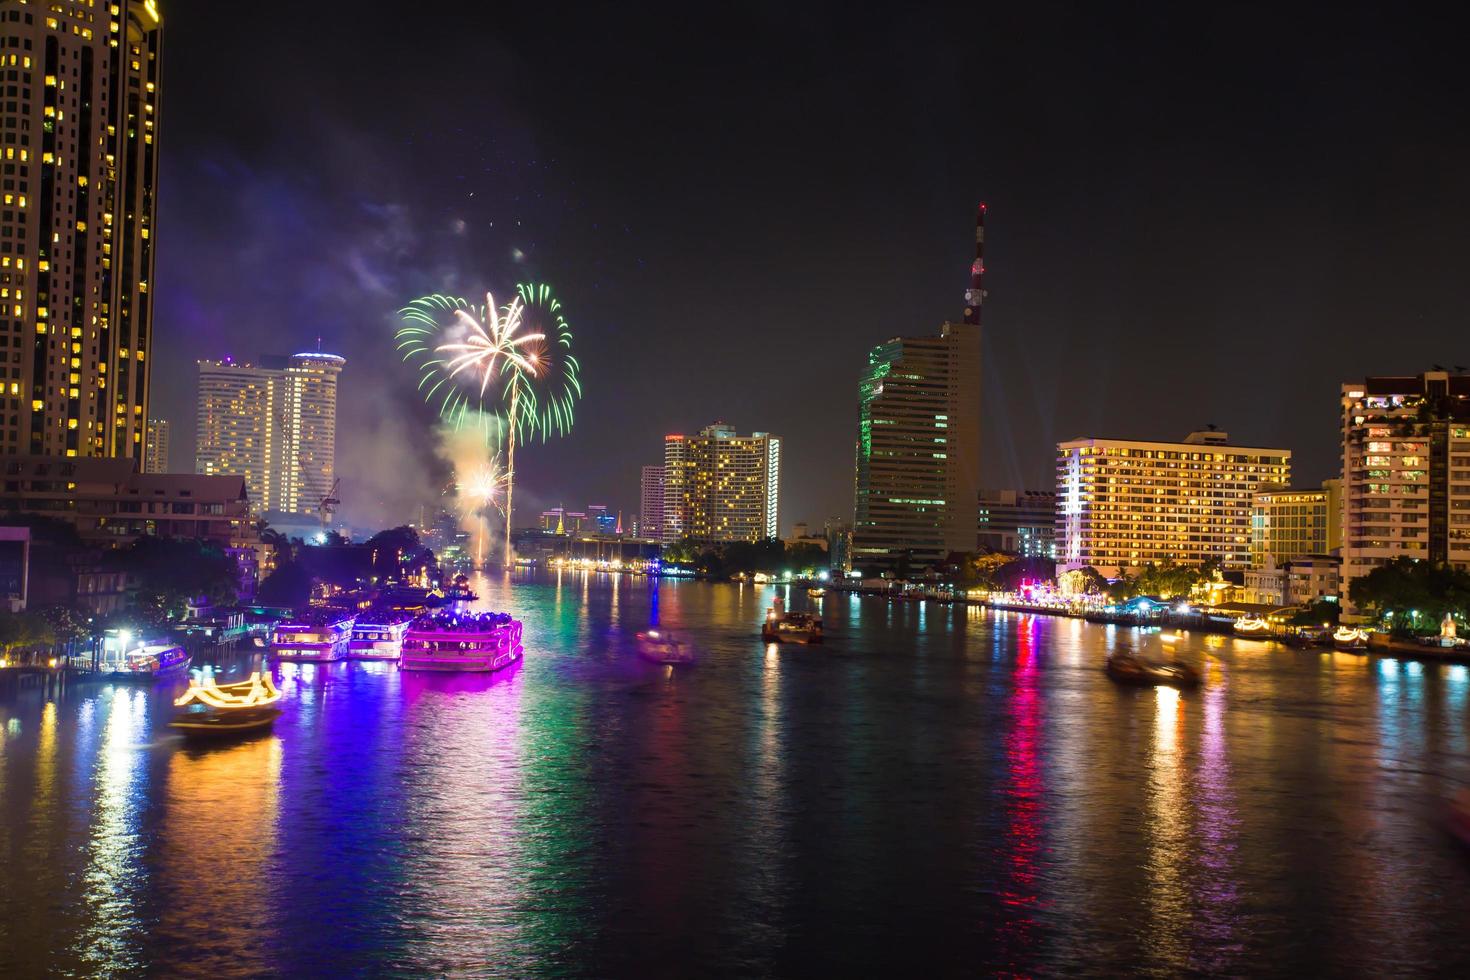 Firework at Chao Phraya River in countdown celebration party 2016 Bangkok Thailand photo